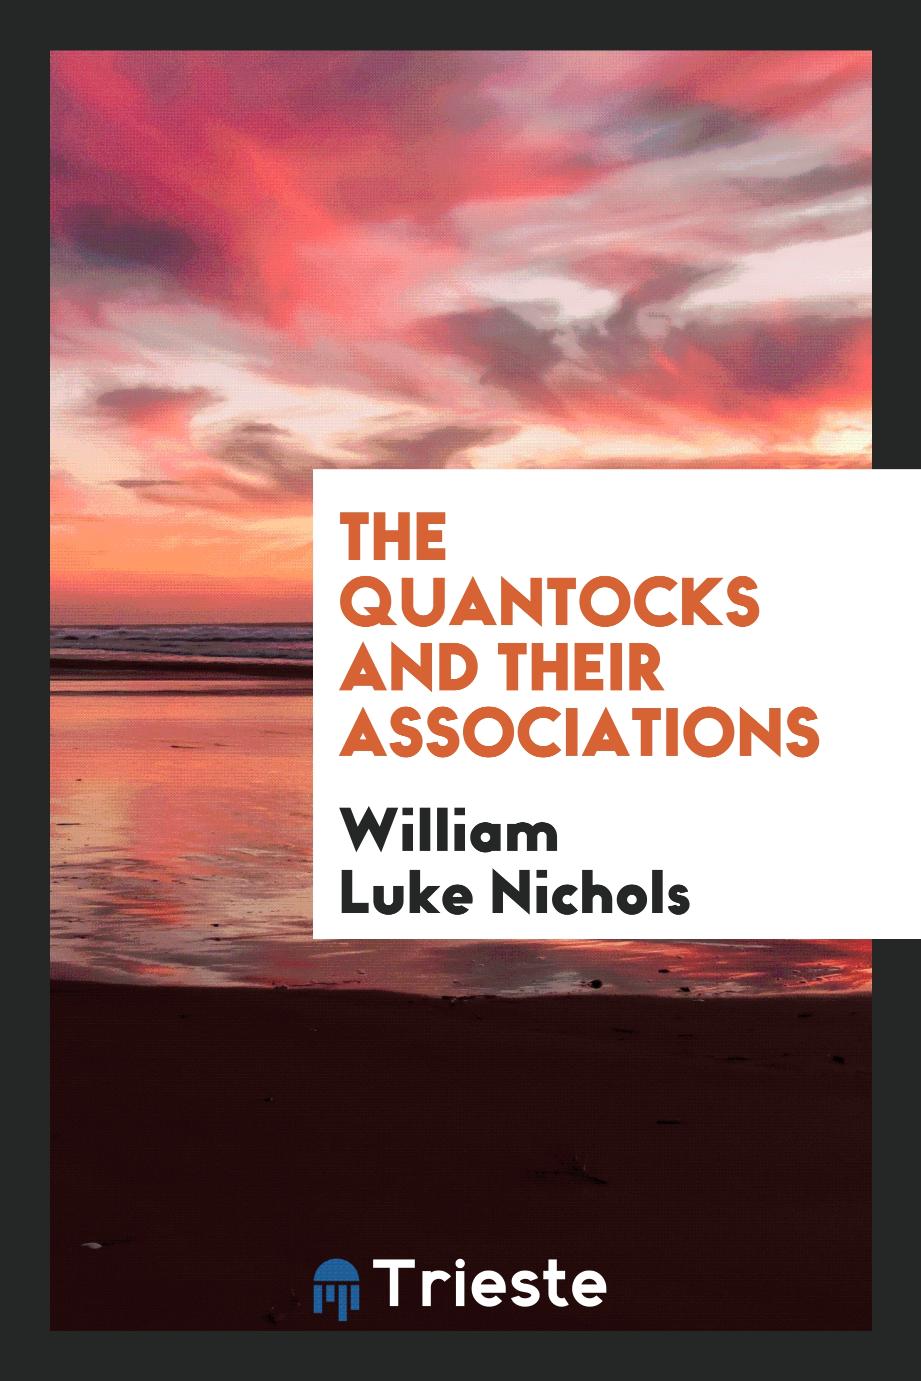 The Quantocks and Their Associations